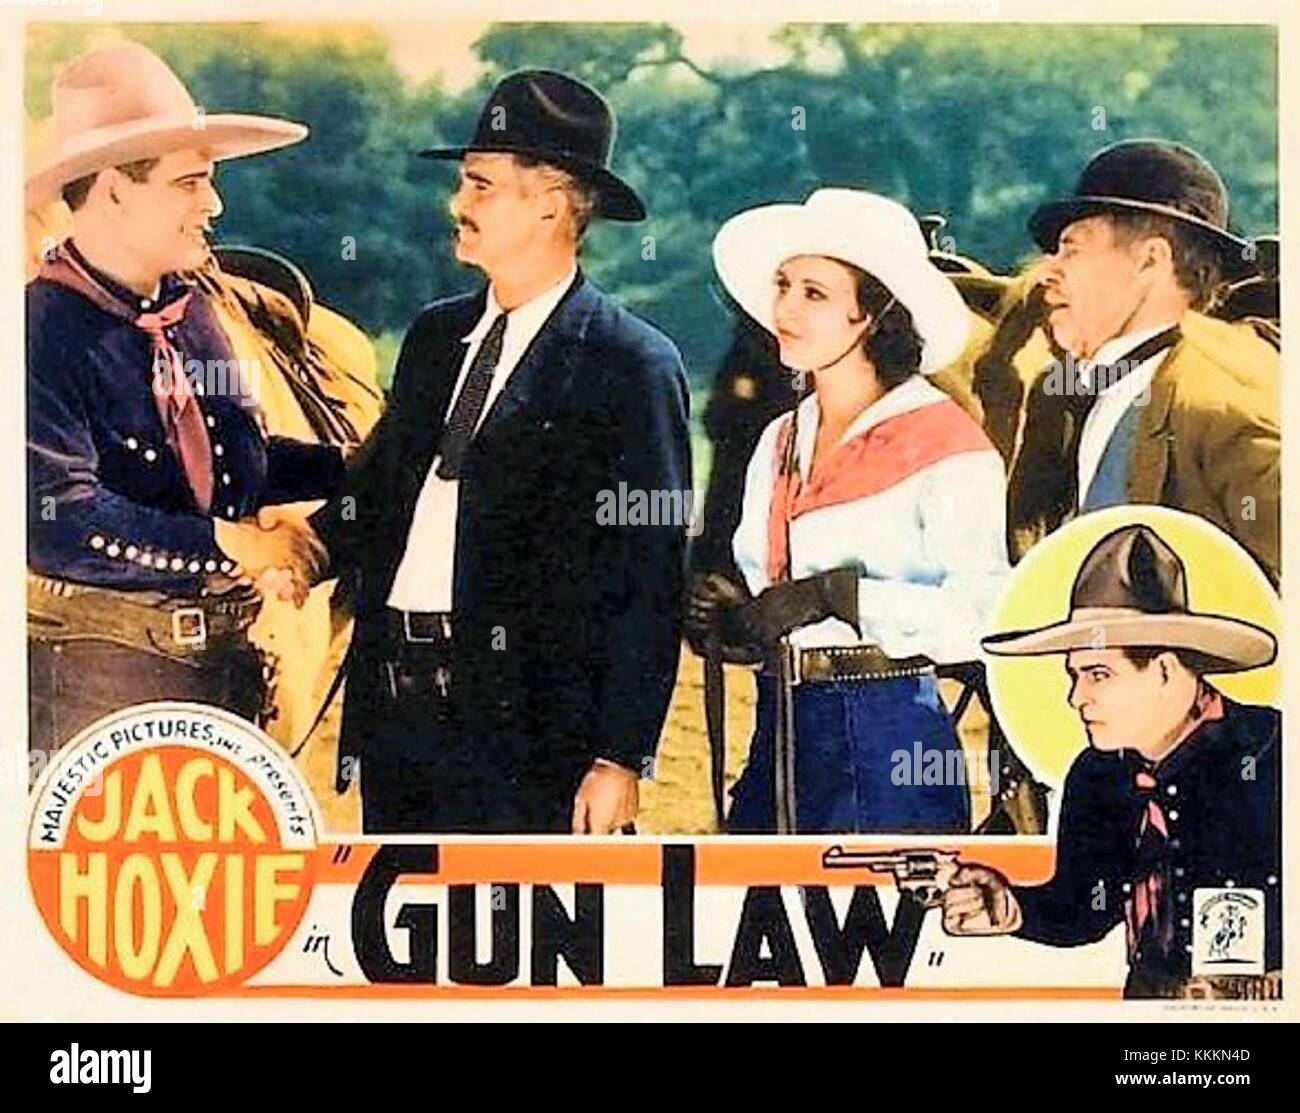 Gun Law film 1933 poster Stock Photo